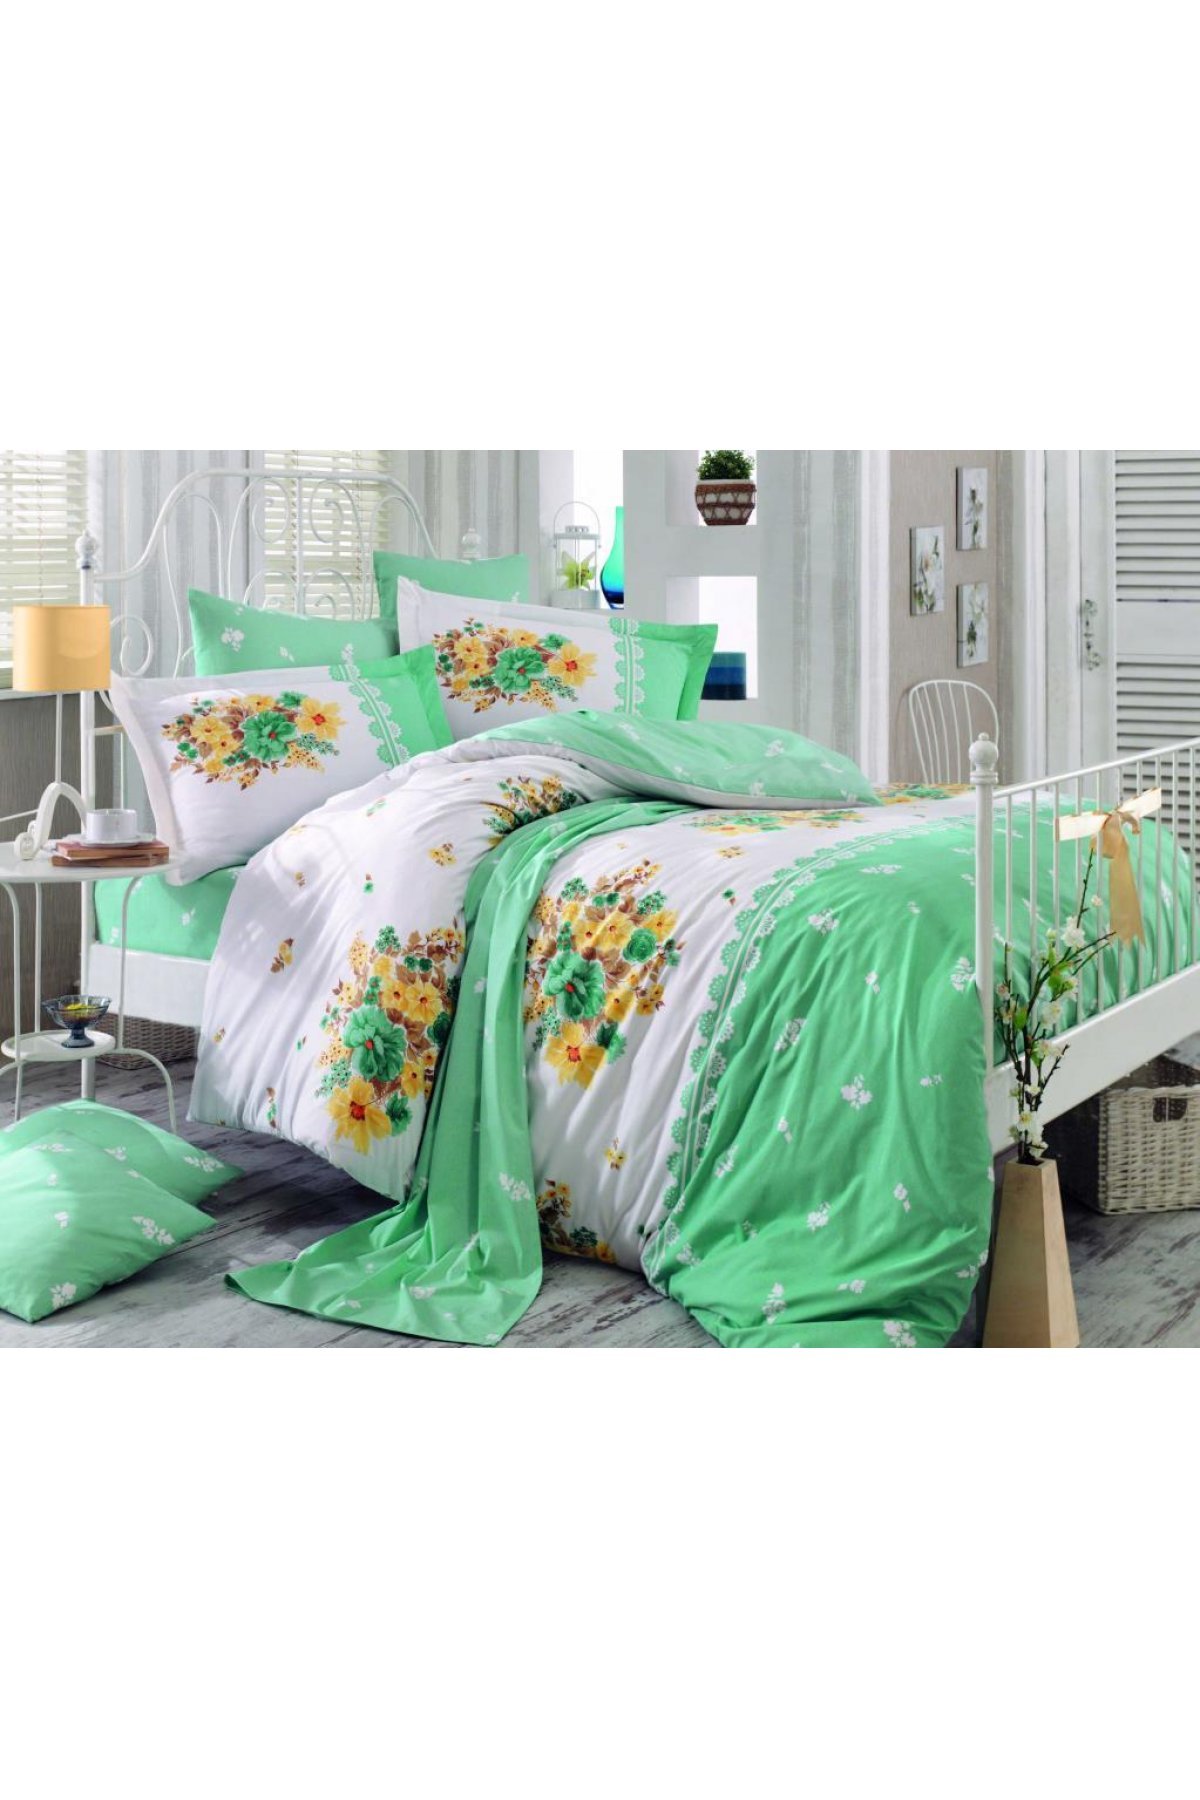 Bedding-Light green